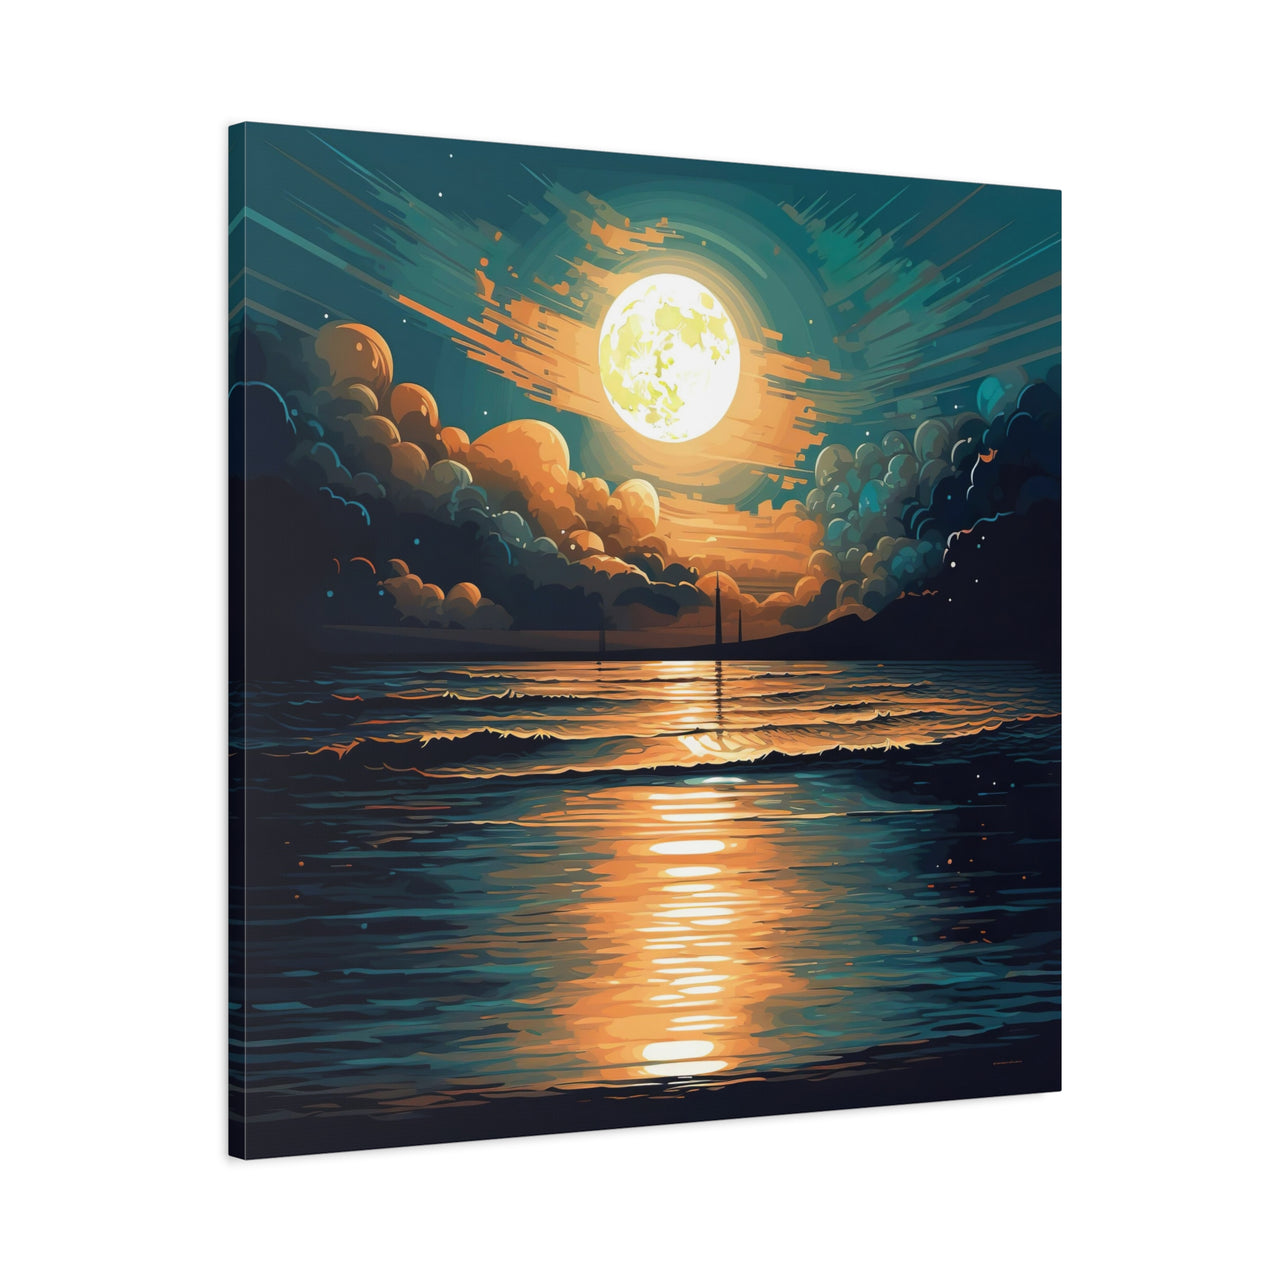 Moonlit Ocean Wall Art Canvas